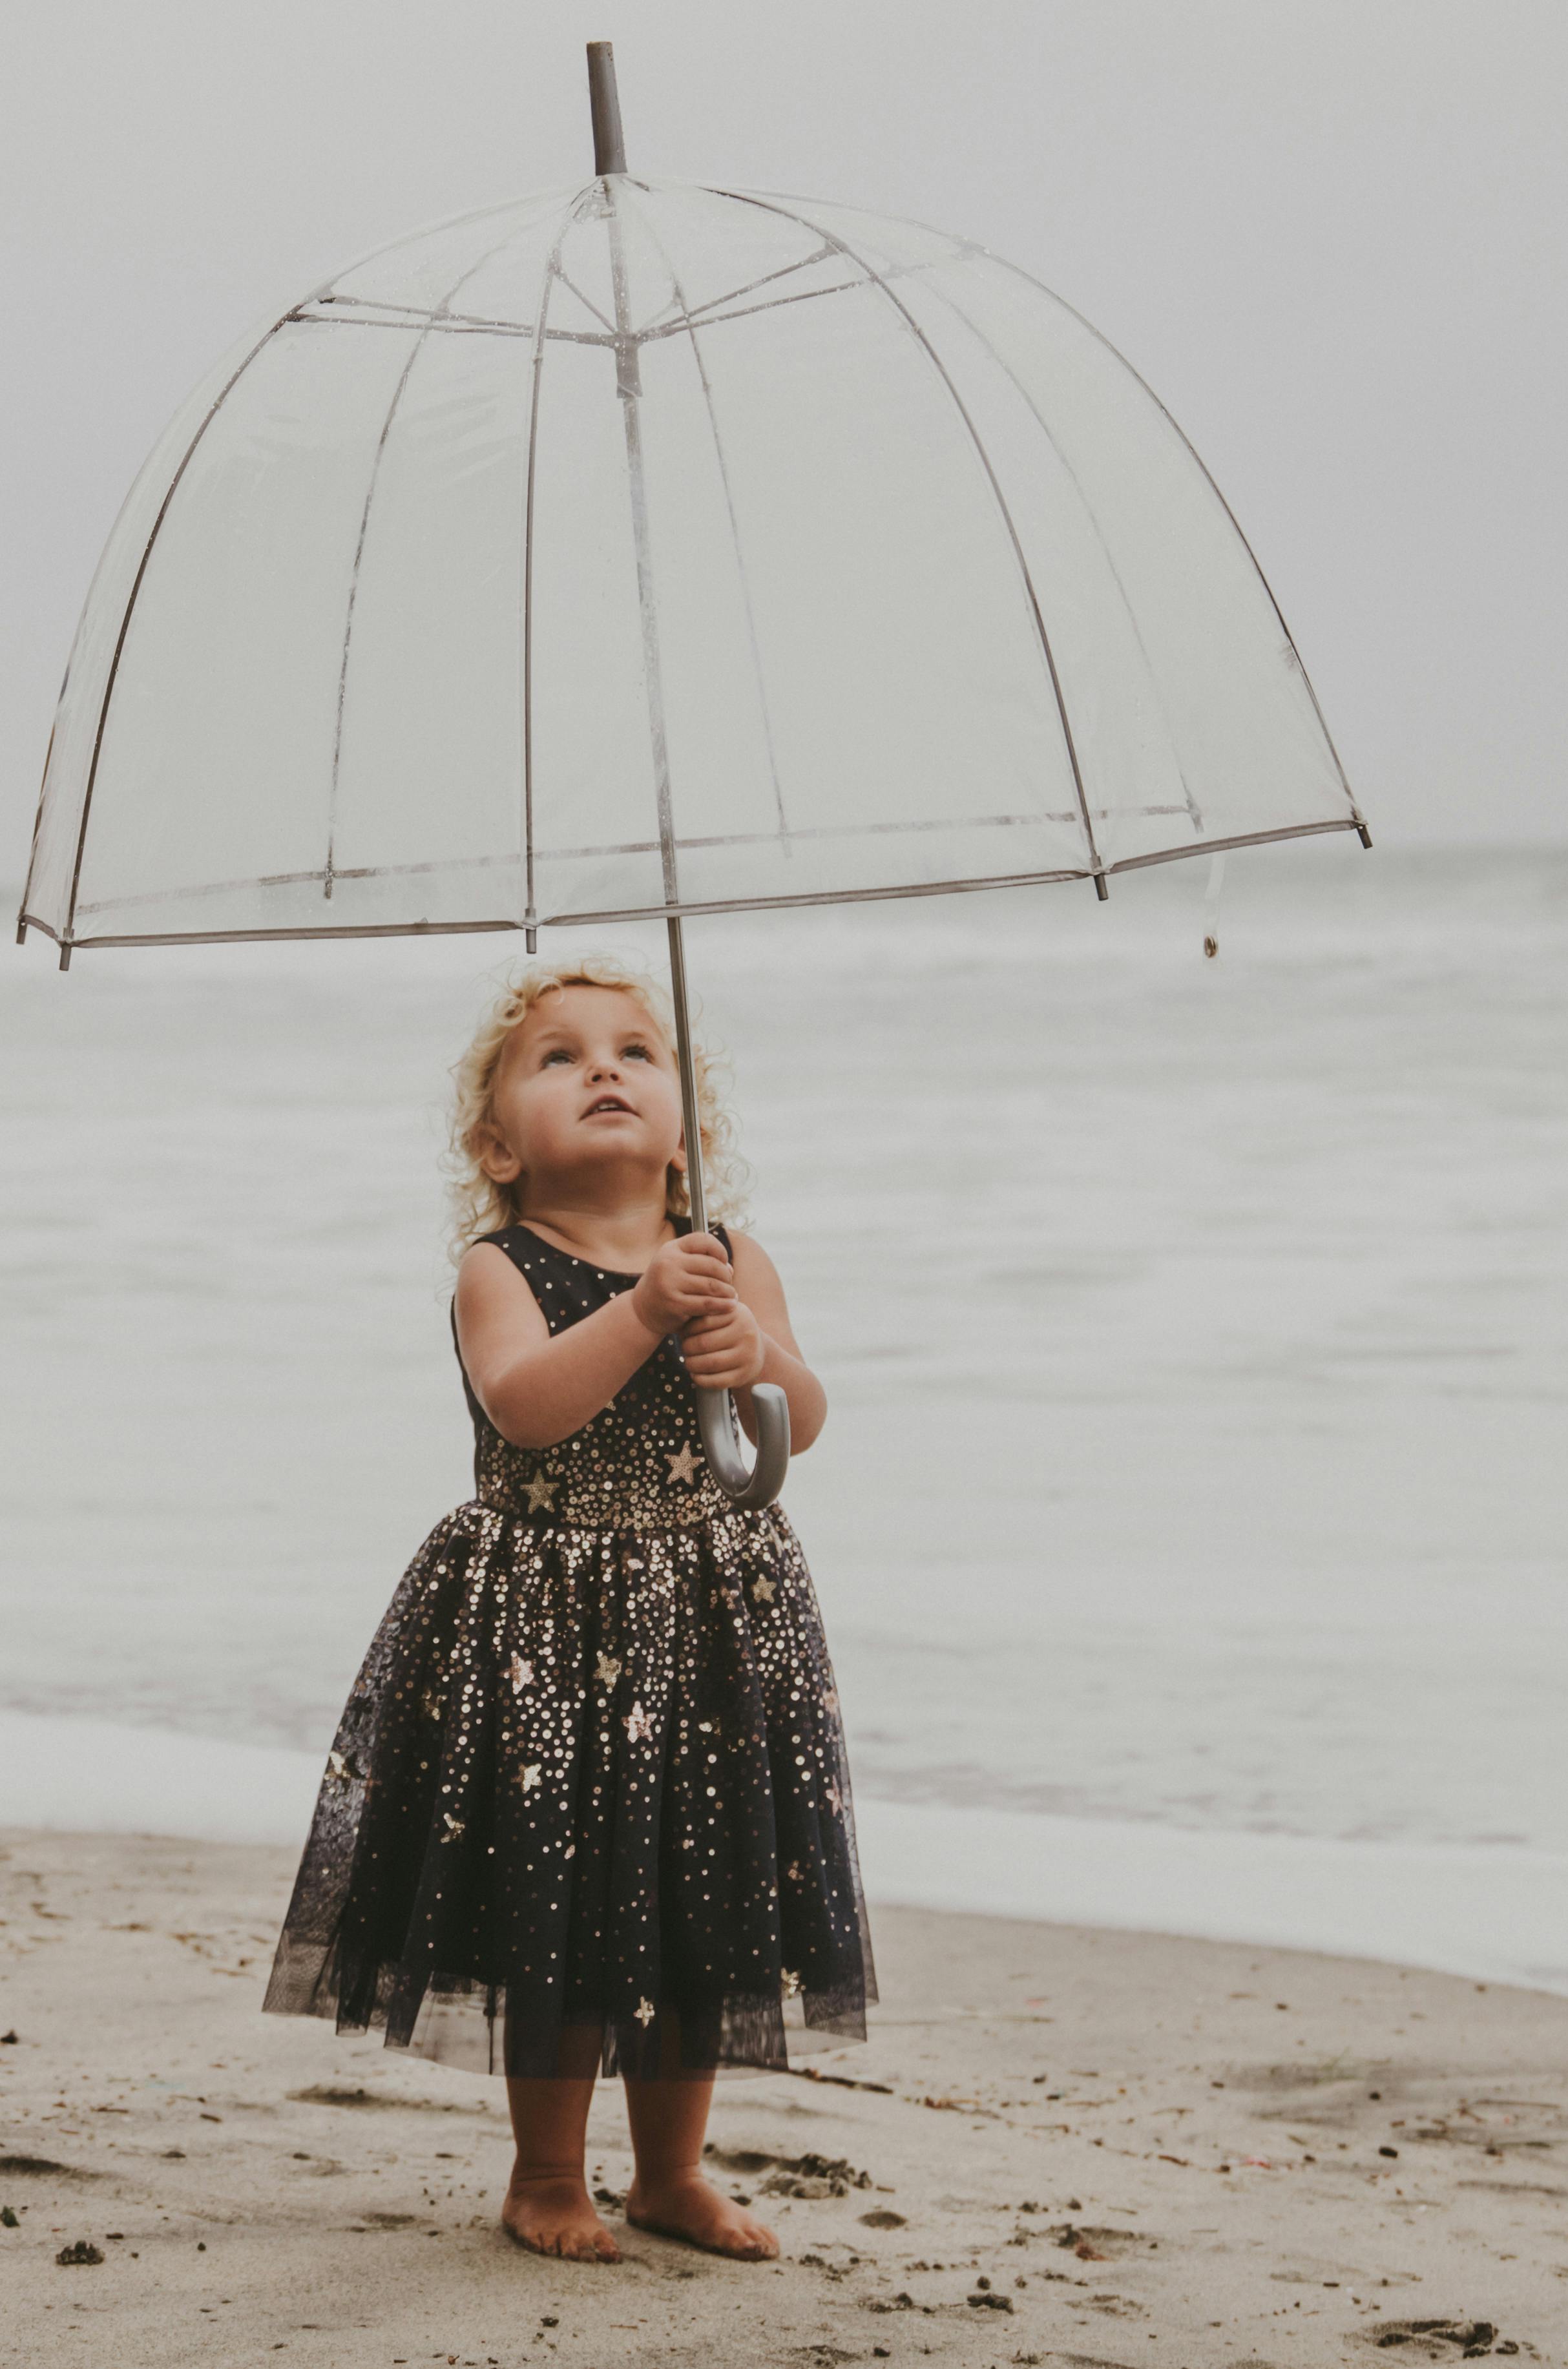 photo of a young girl on a beach under a transparent umbrella